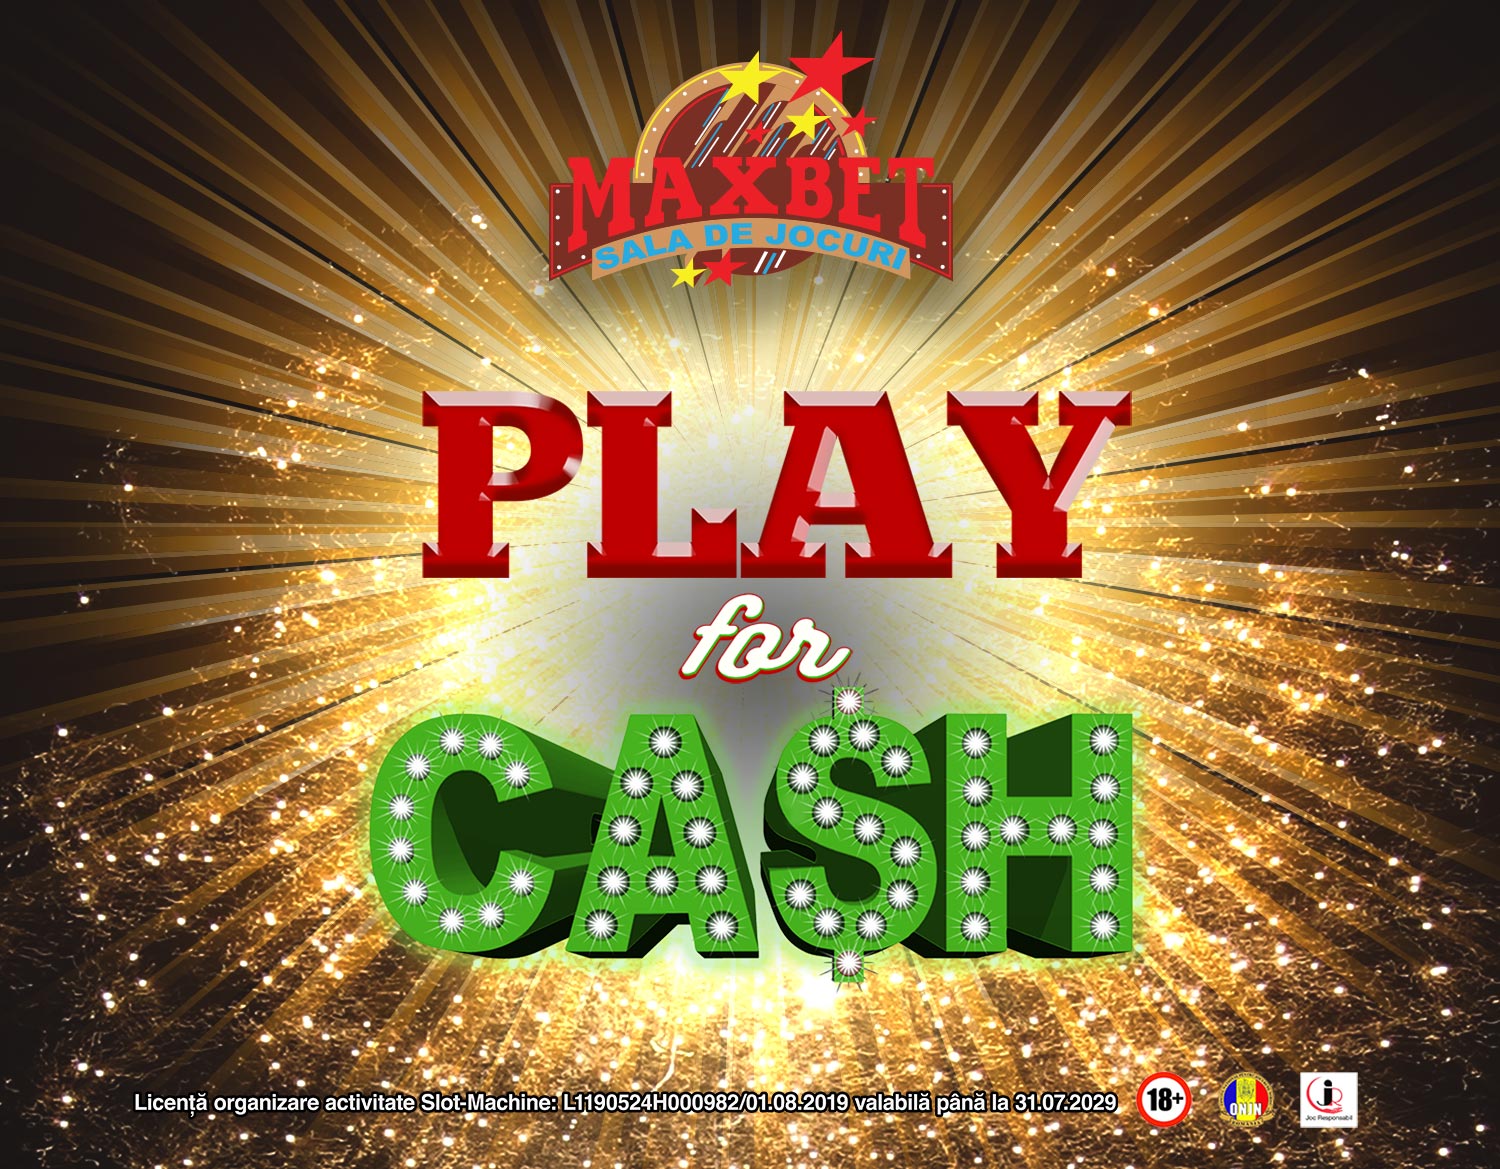 Play 4 Cash